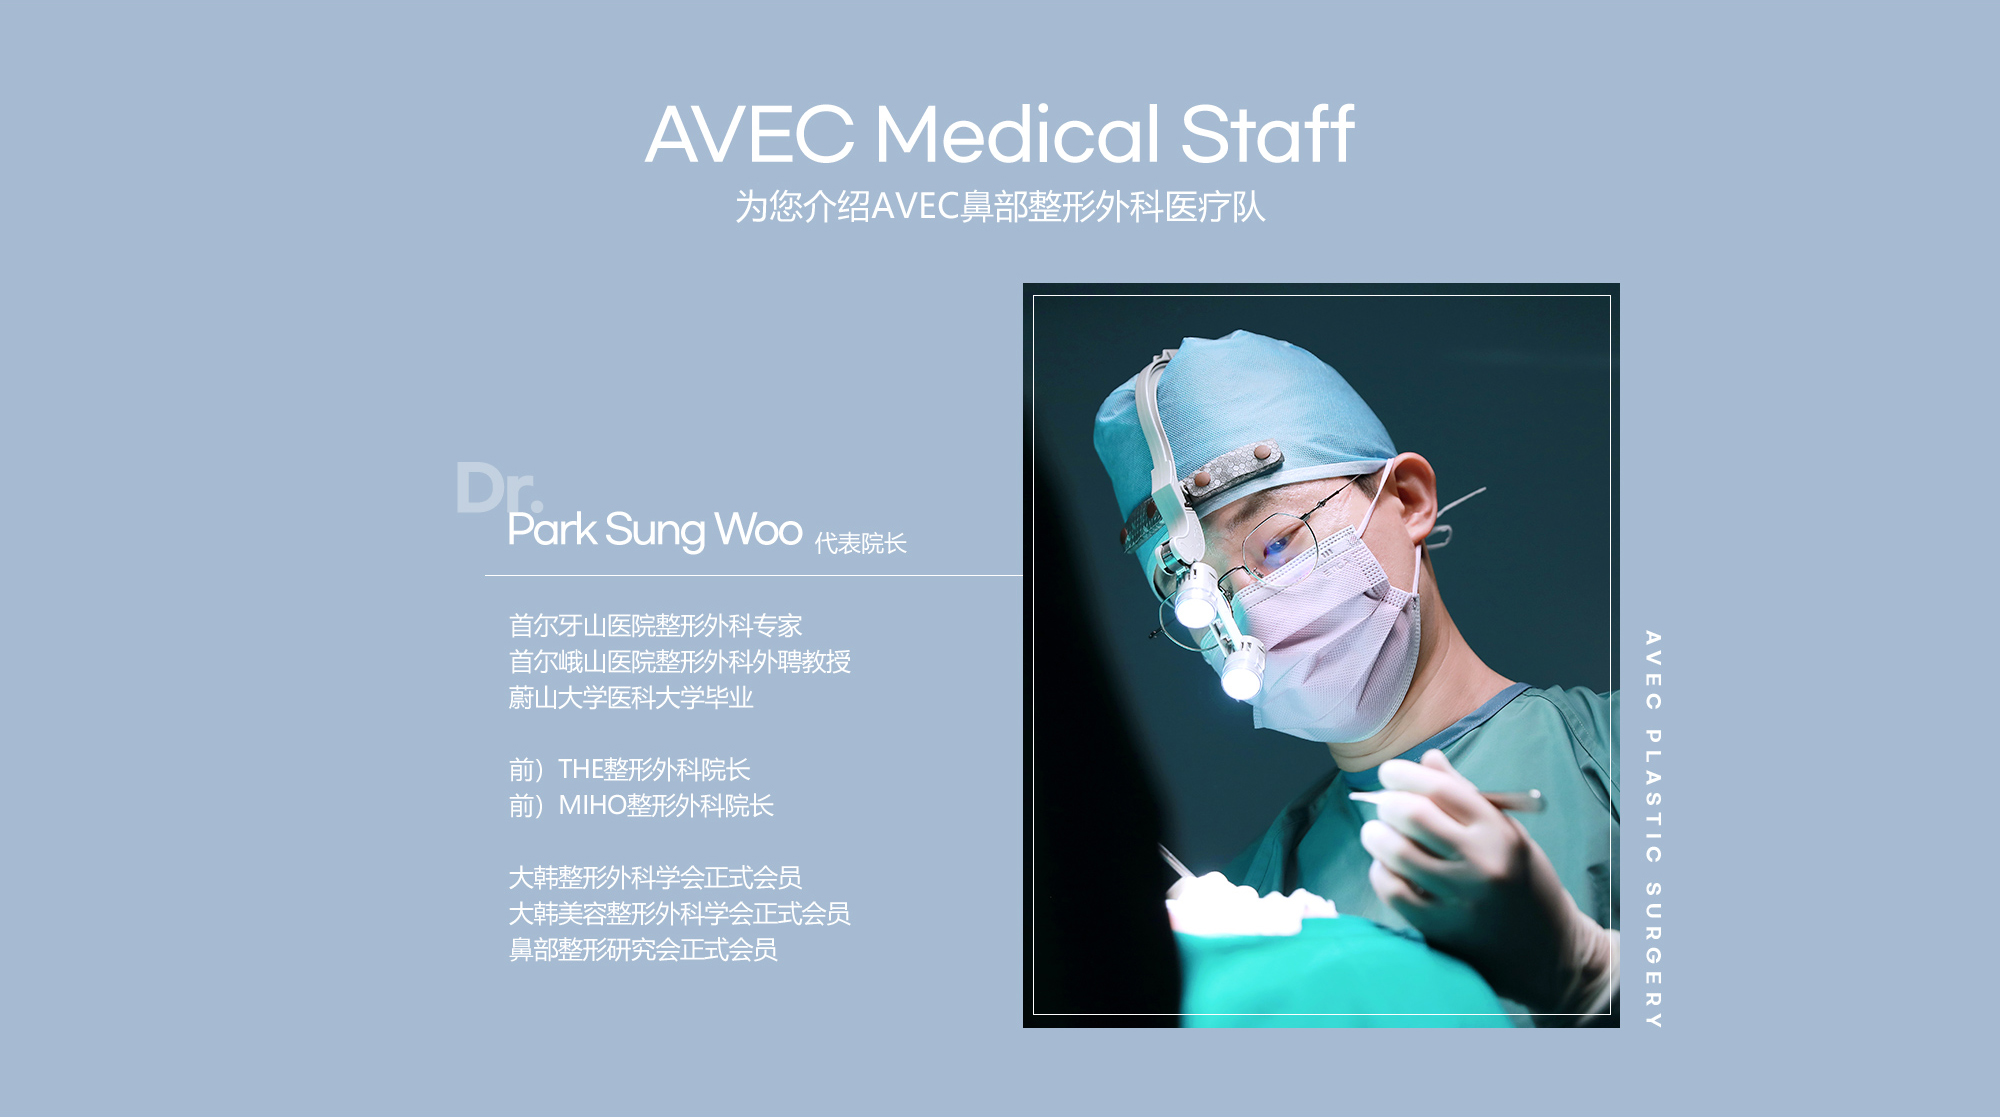 AVEC Medical Staff